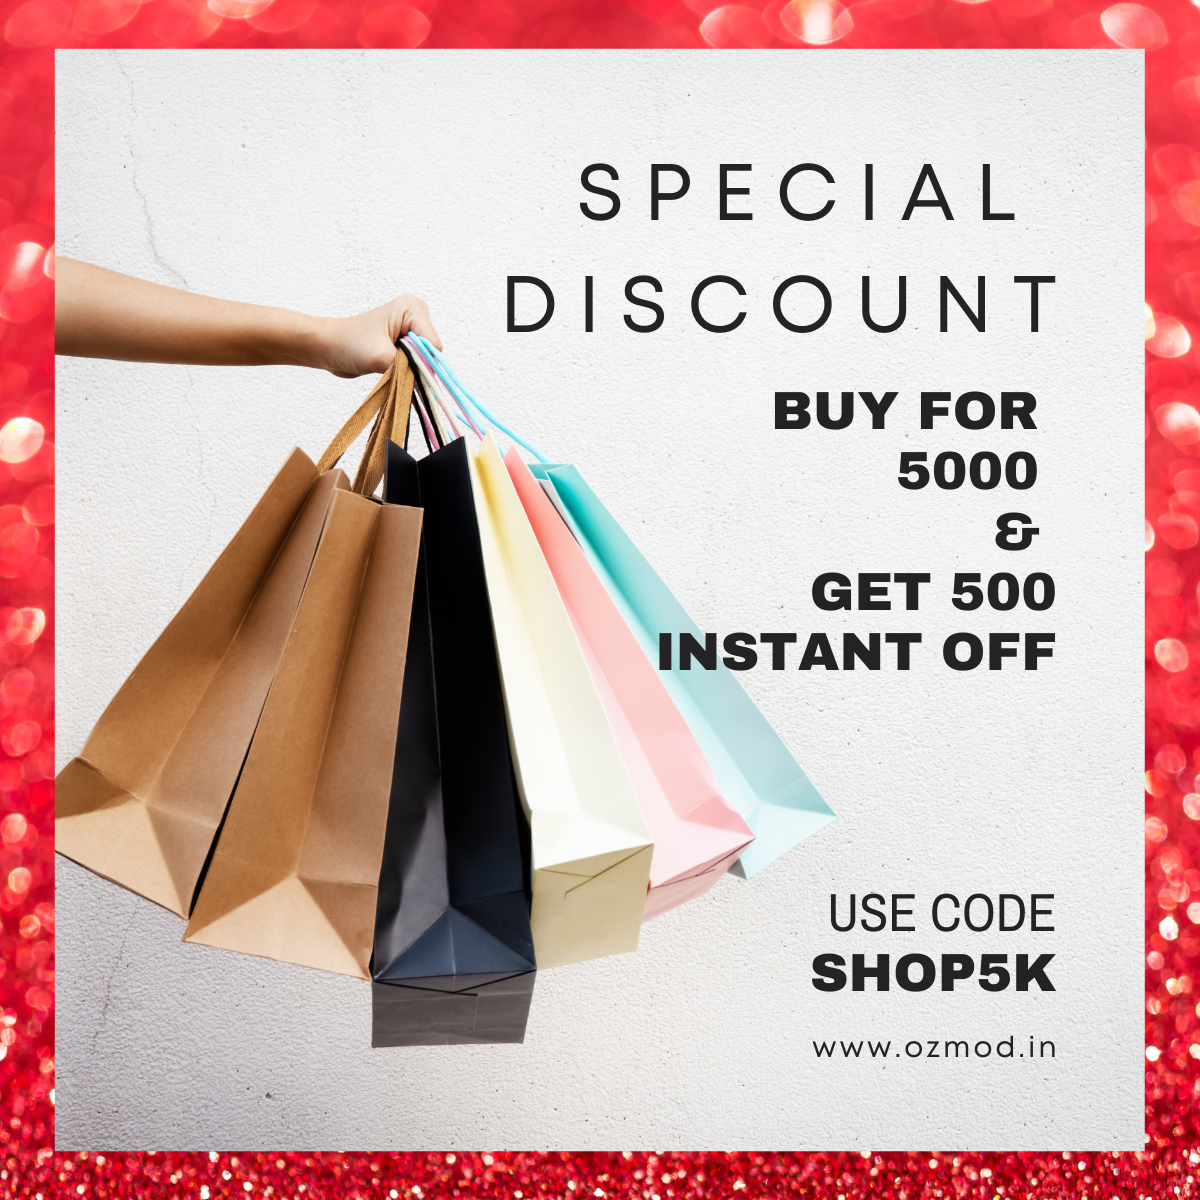 Special Discount - Get 500 Instant Off